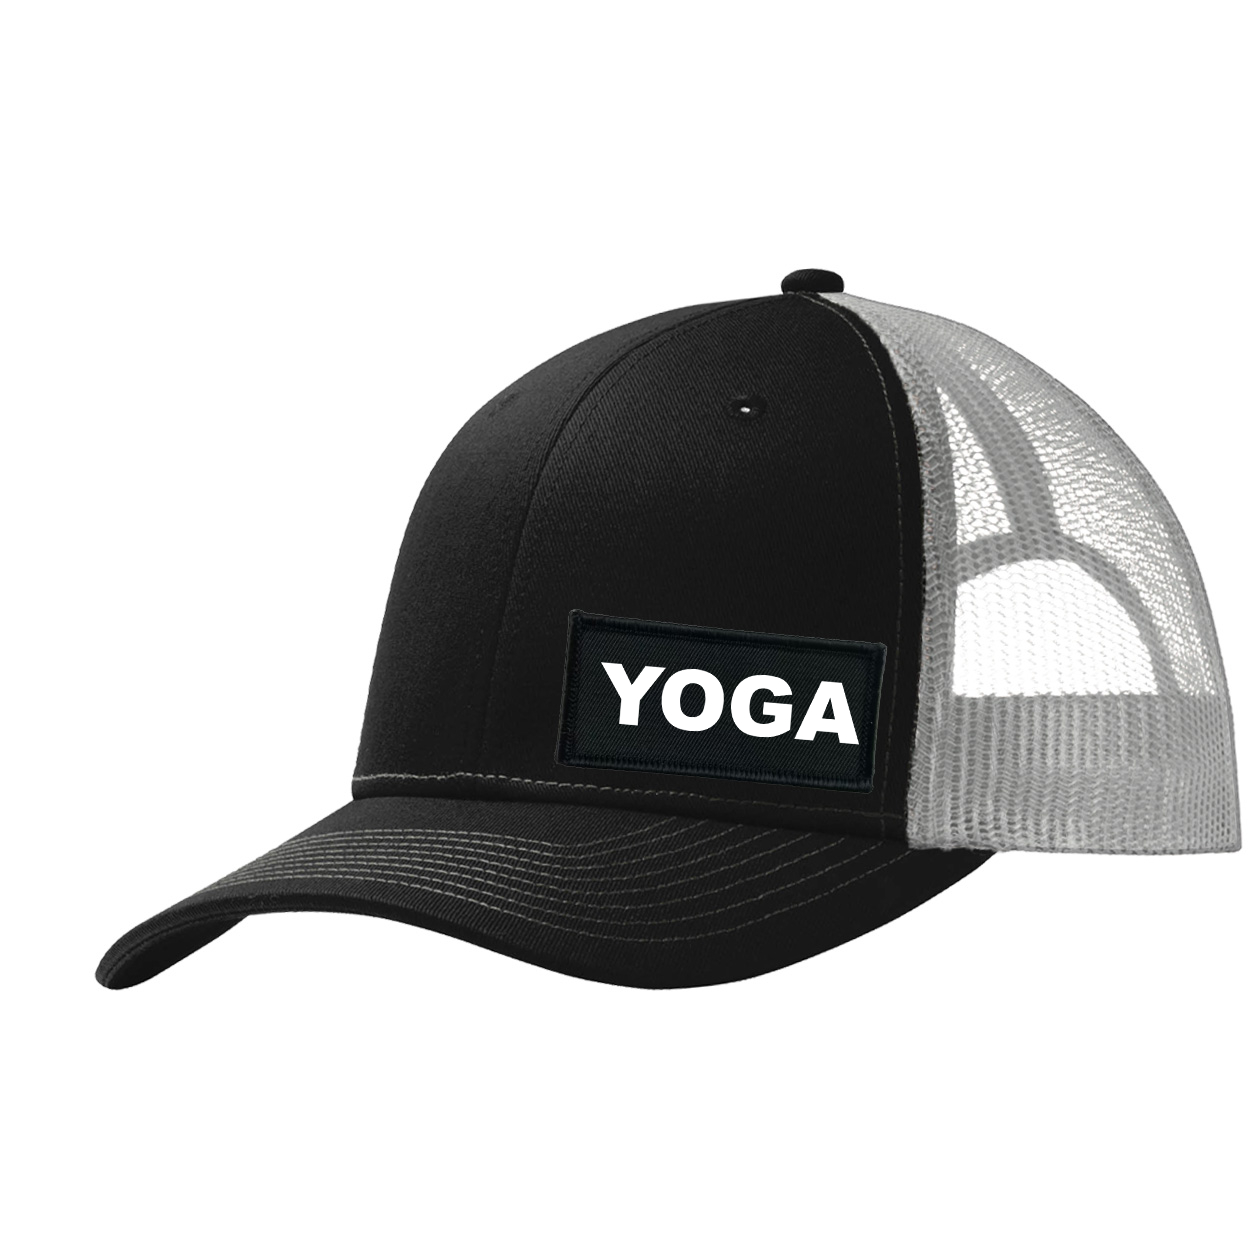 Yoga Brand Logo Night Out Woven Patch Snapback Trucker Hat Black/Gray 